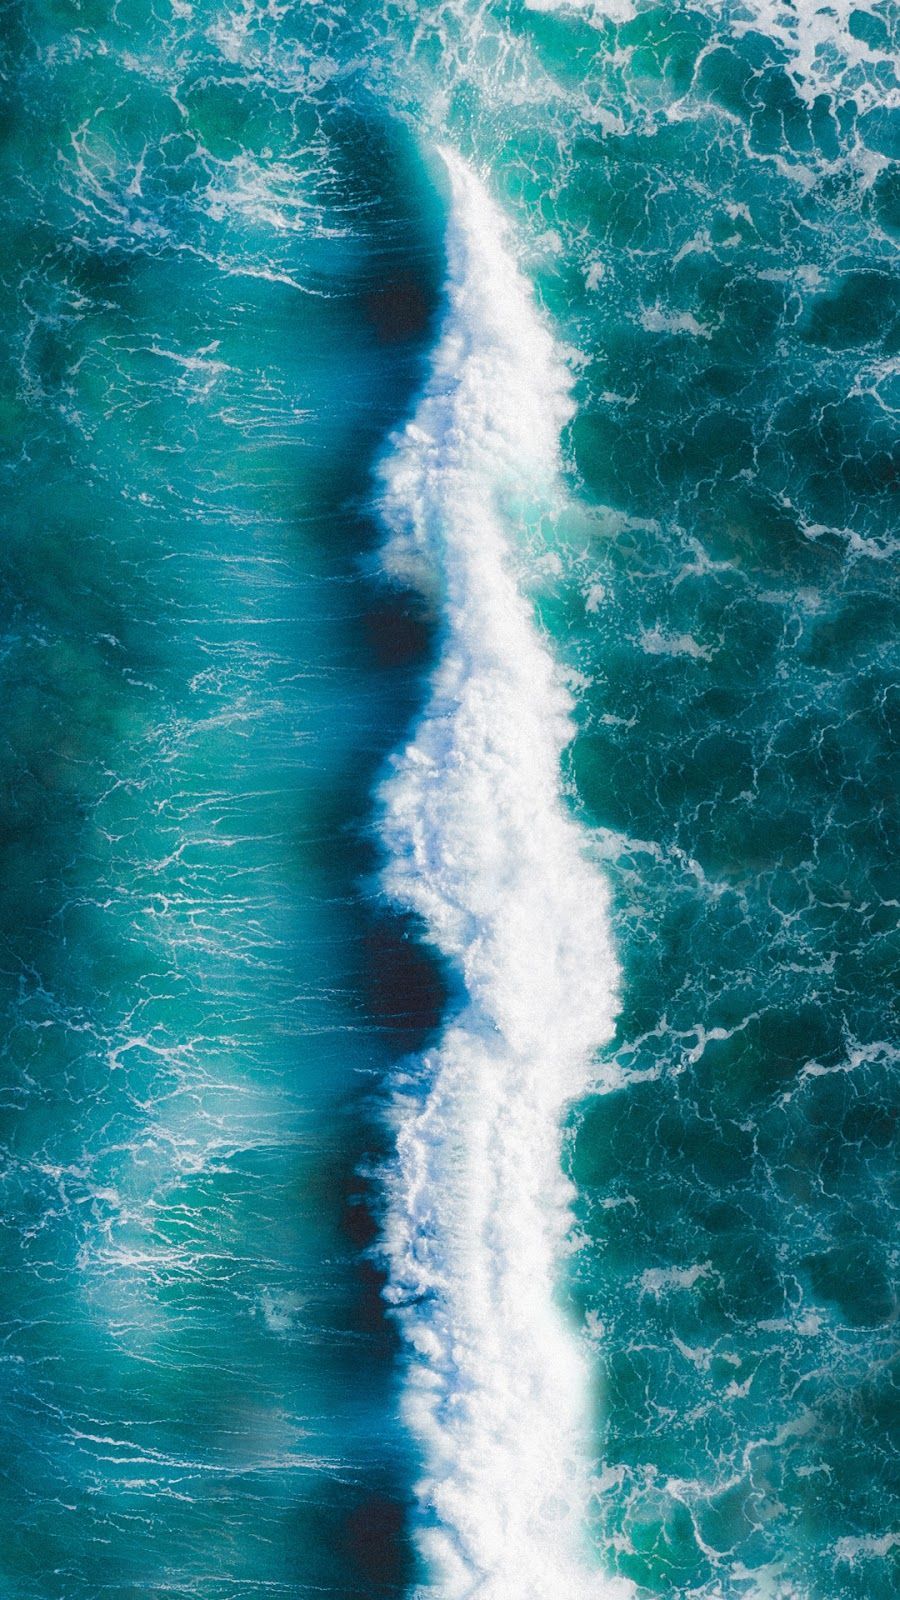 Ocean waves #wallpaper #iphone #android #background. Ocean